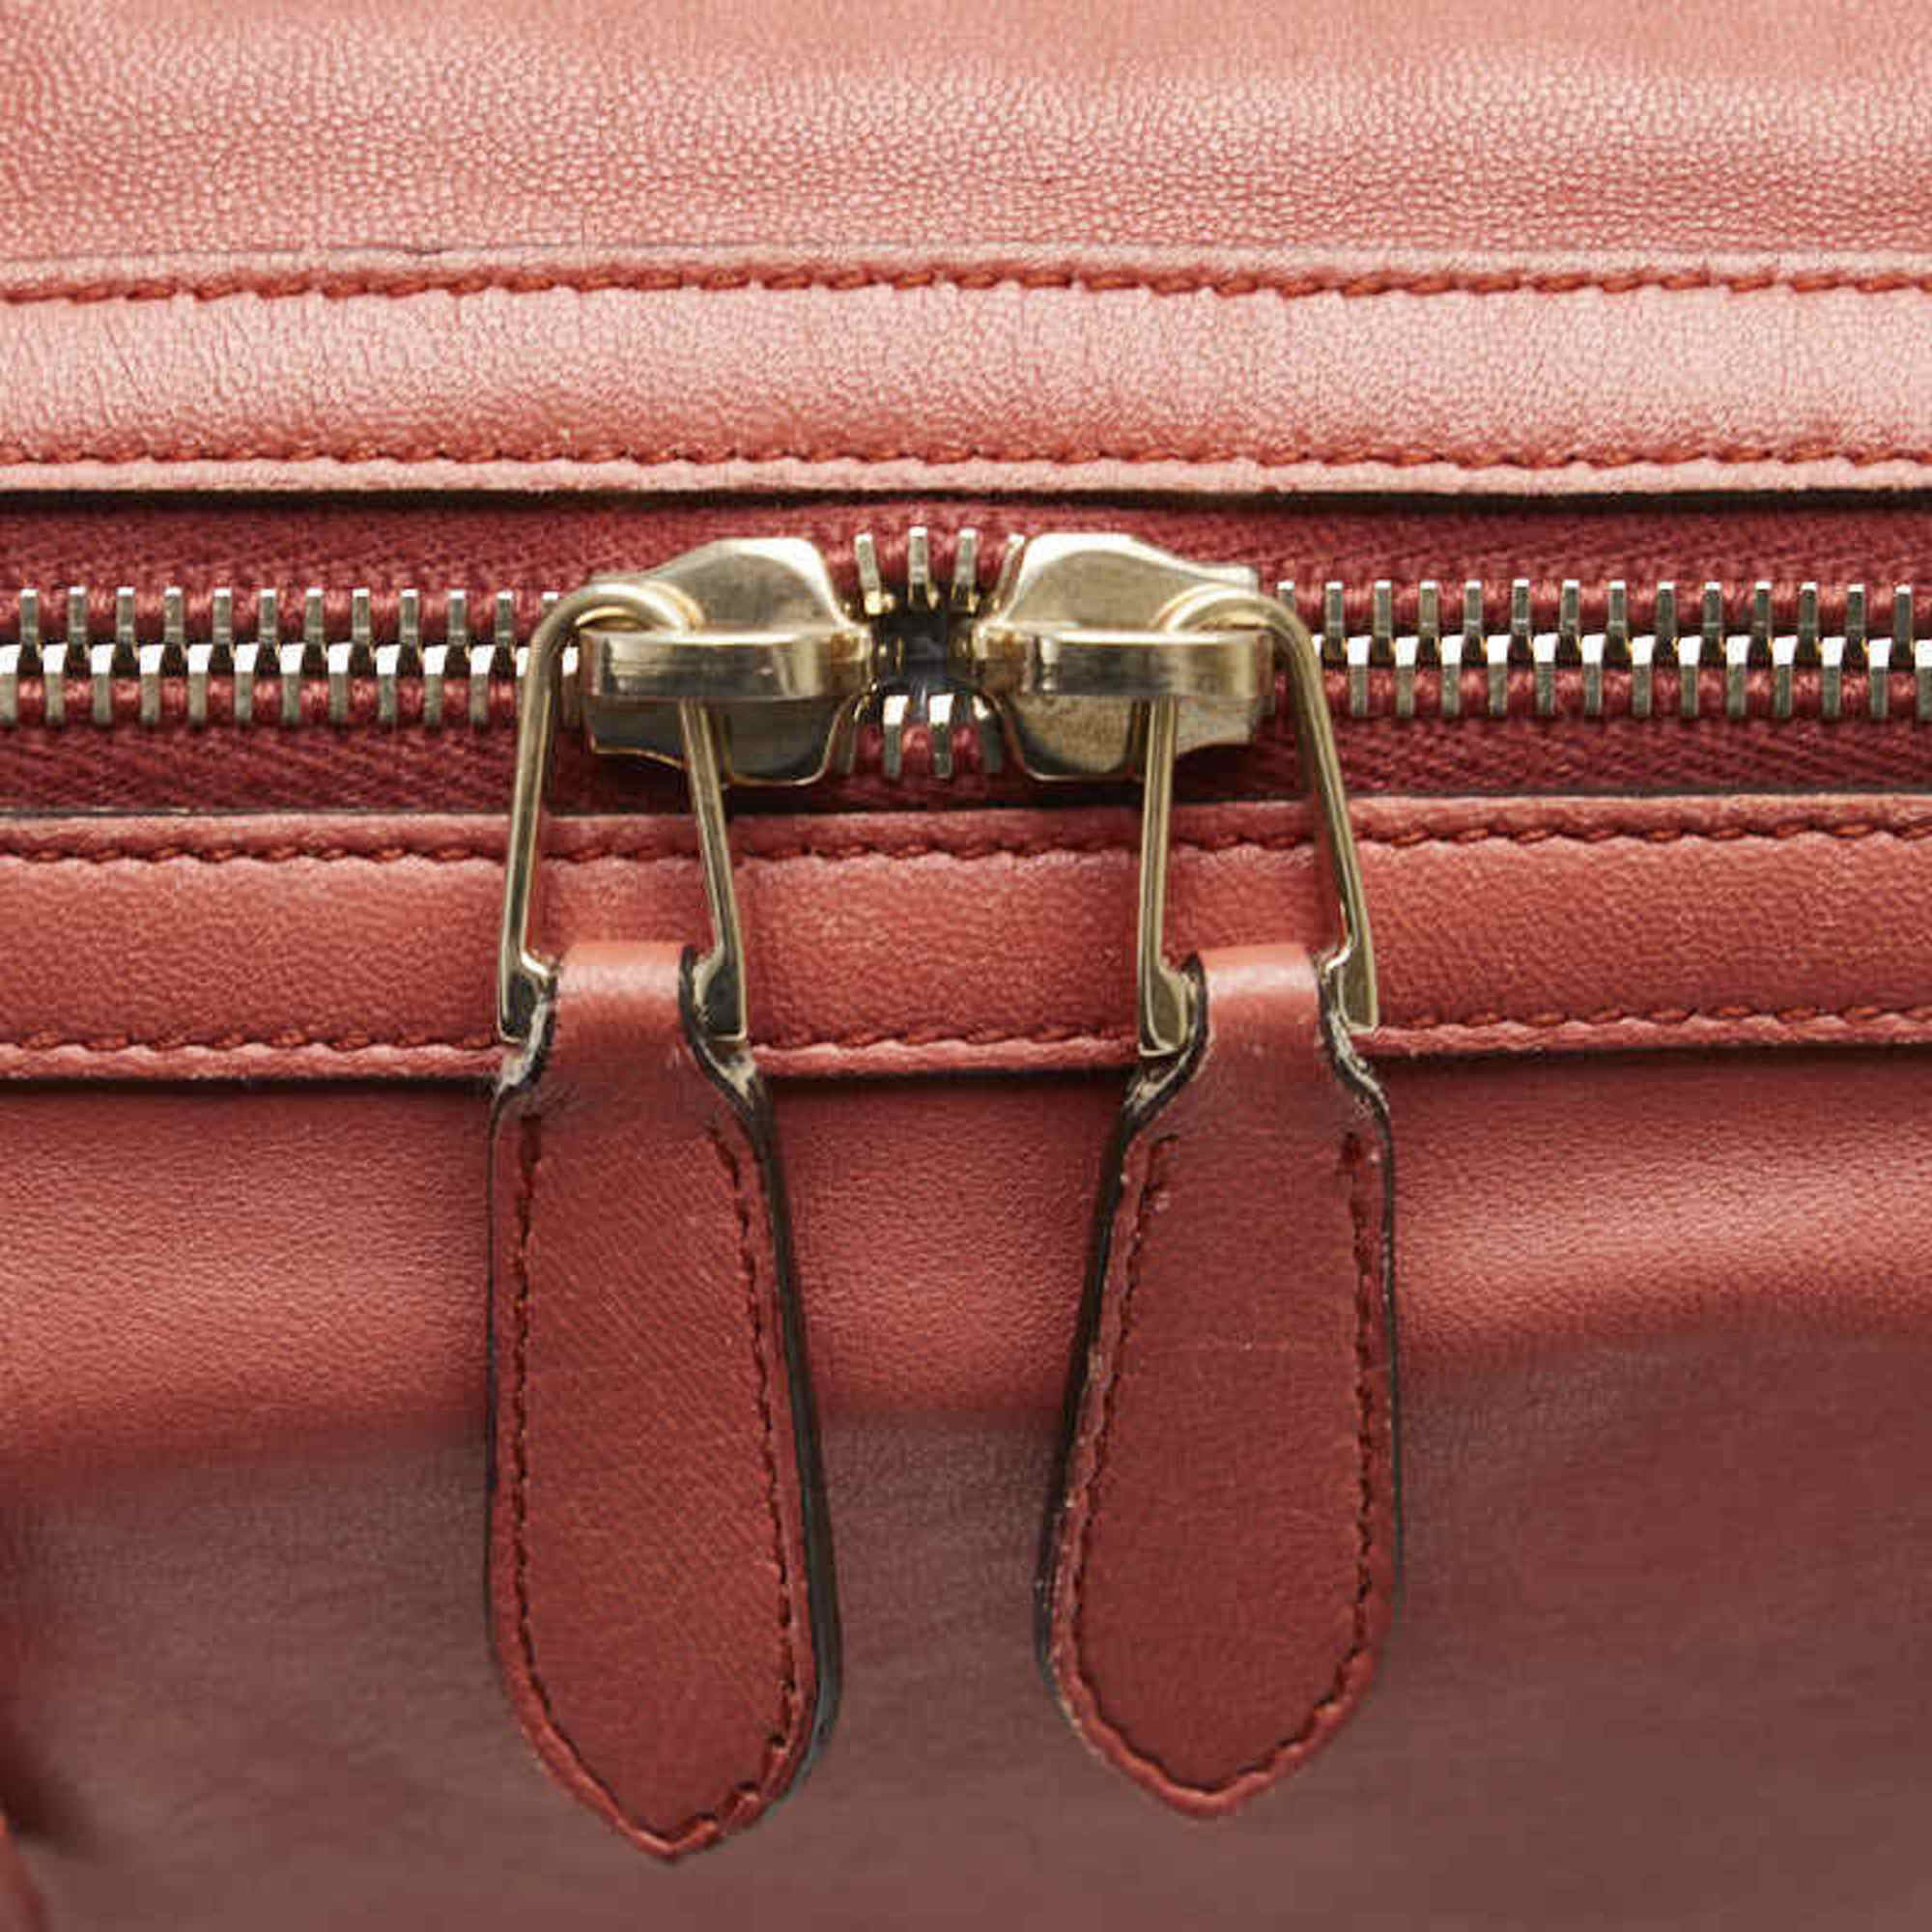 Gucci ribbon motif Boston bag handbag shoulder 336665 pink leather ladies GUCCI